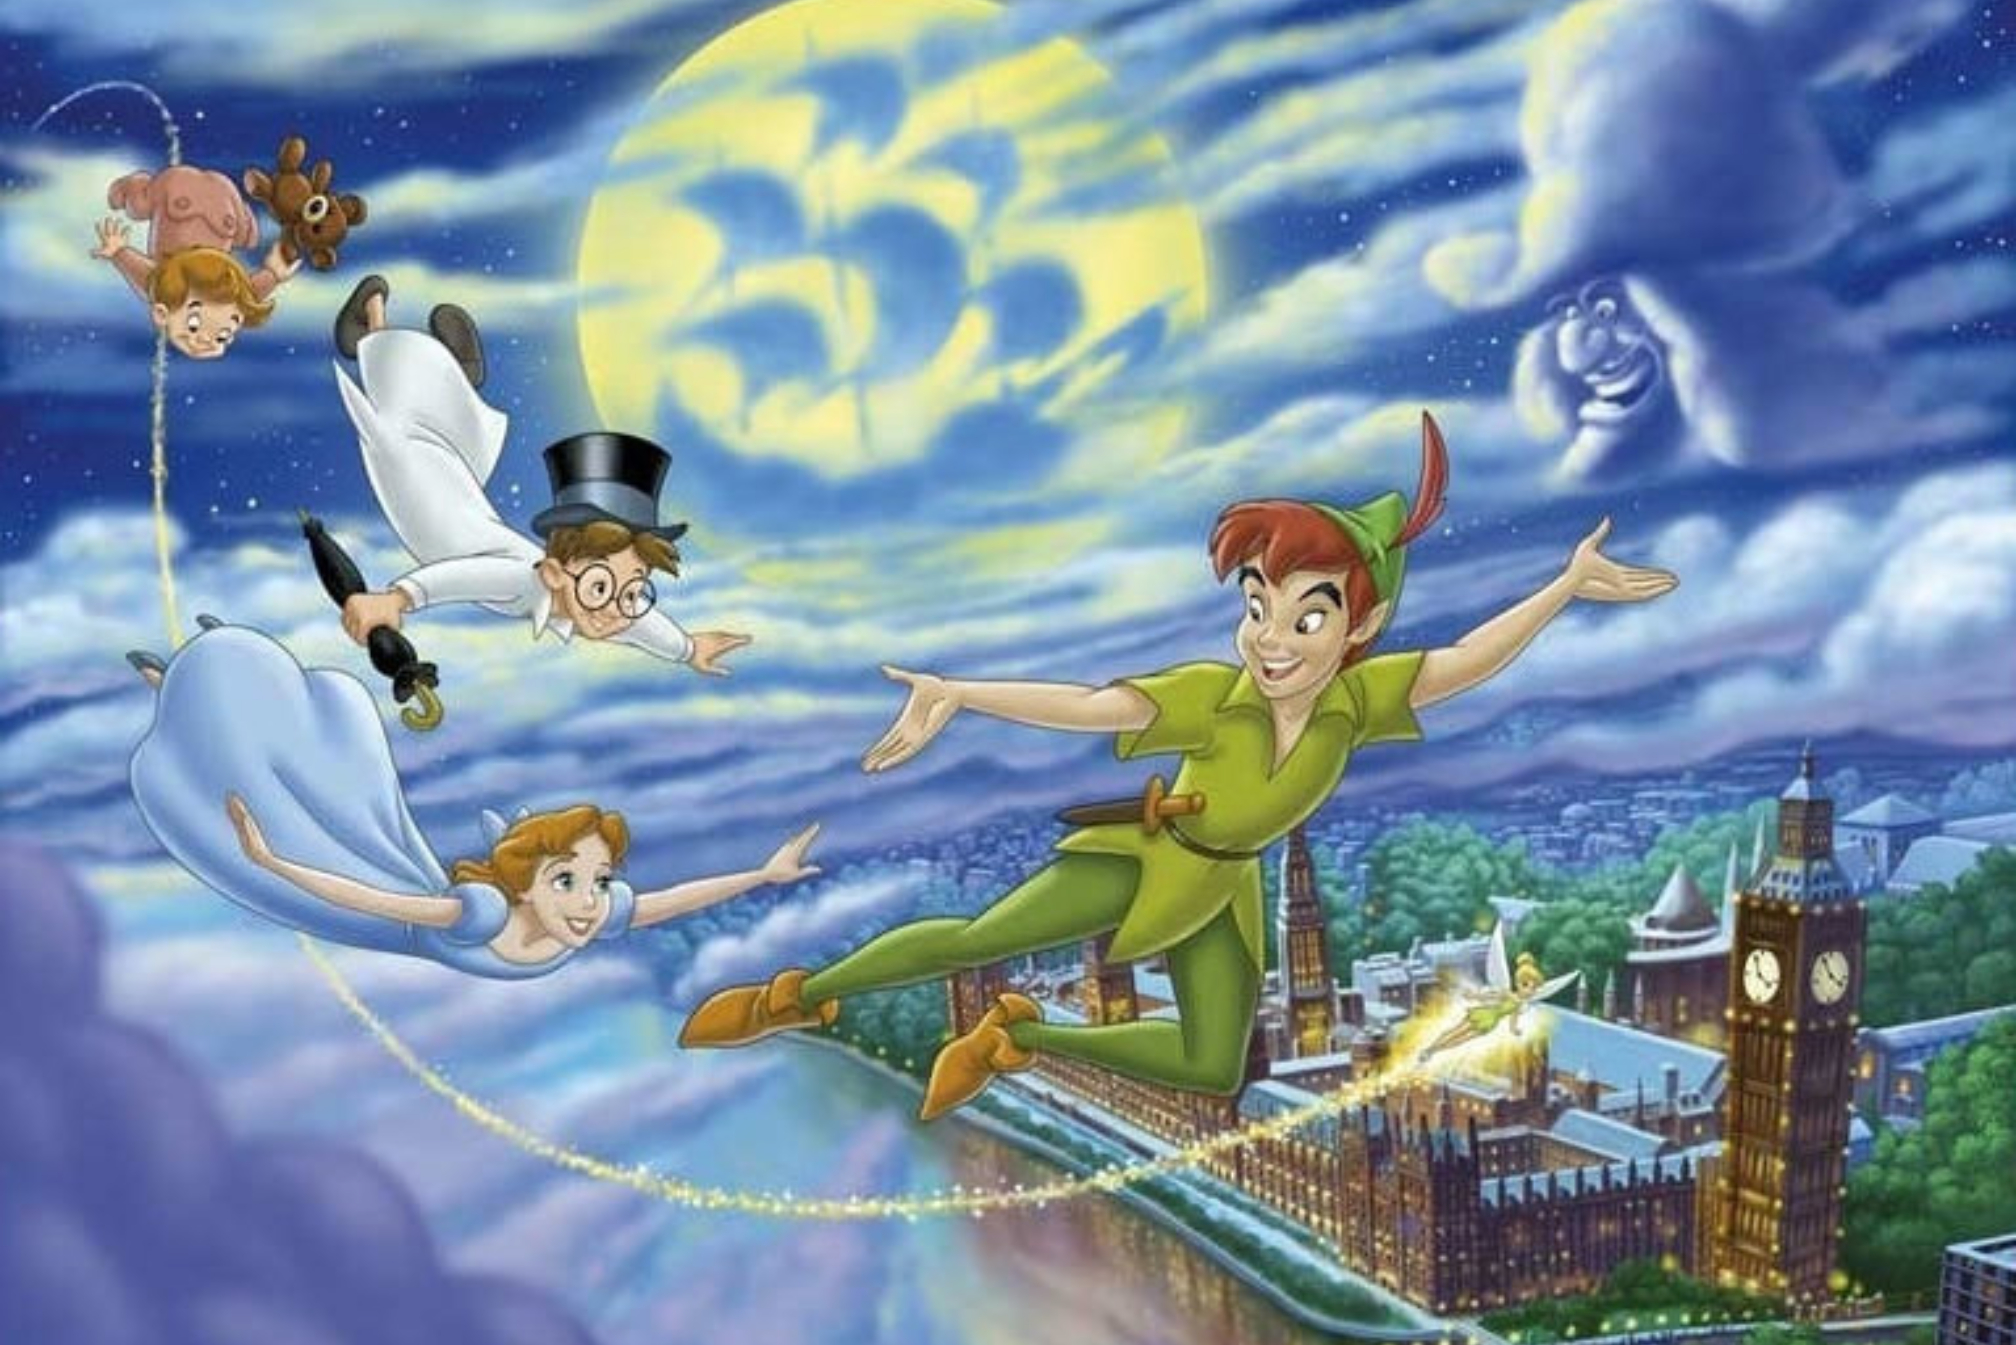 Peter Pan: Η θλιβερή ιστορία πίσω από το παραμύθι με το αγόρι που δεν μεγάλωνε ποτέ